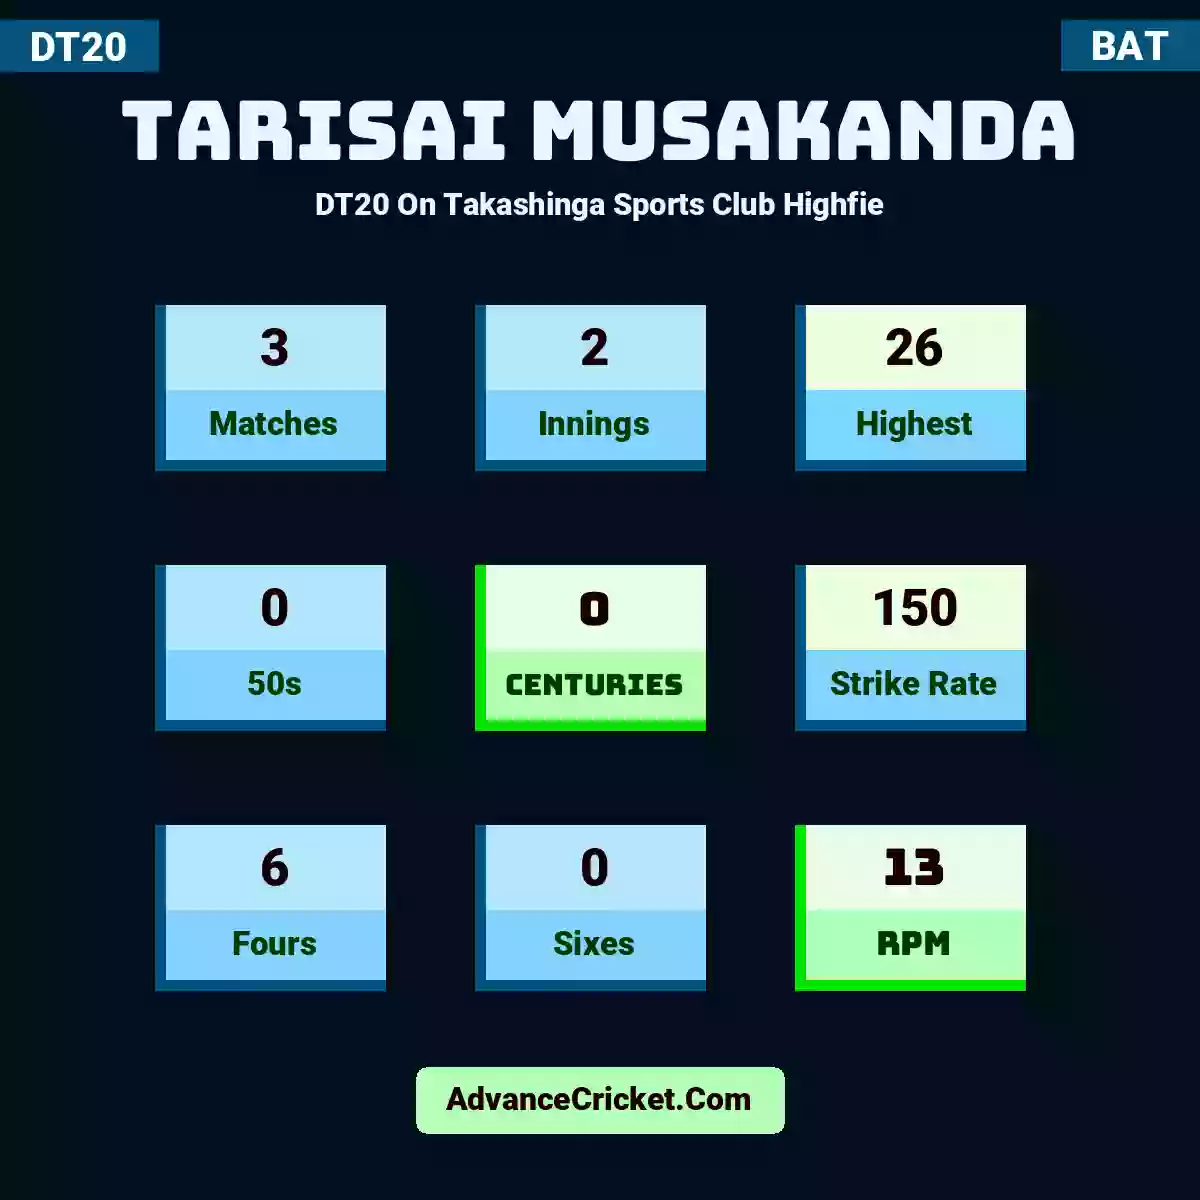 Tarisai Musakanda DT20  On Takashinga Sports Club Highfie, Tarisai Musakanda played 3 matches, scored 26 runs as highest, 0 half-centuries, and 0 centuries, with a strike rate of 150. T.Musakanda hit 6 fours and 0 sixes, with an RPM of 13.